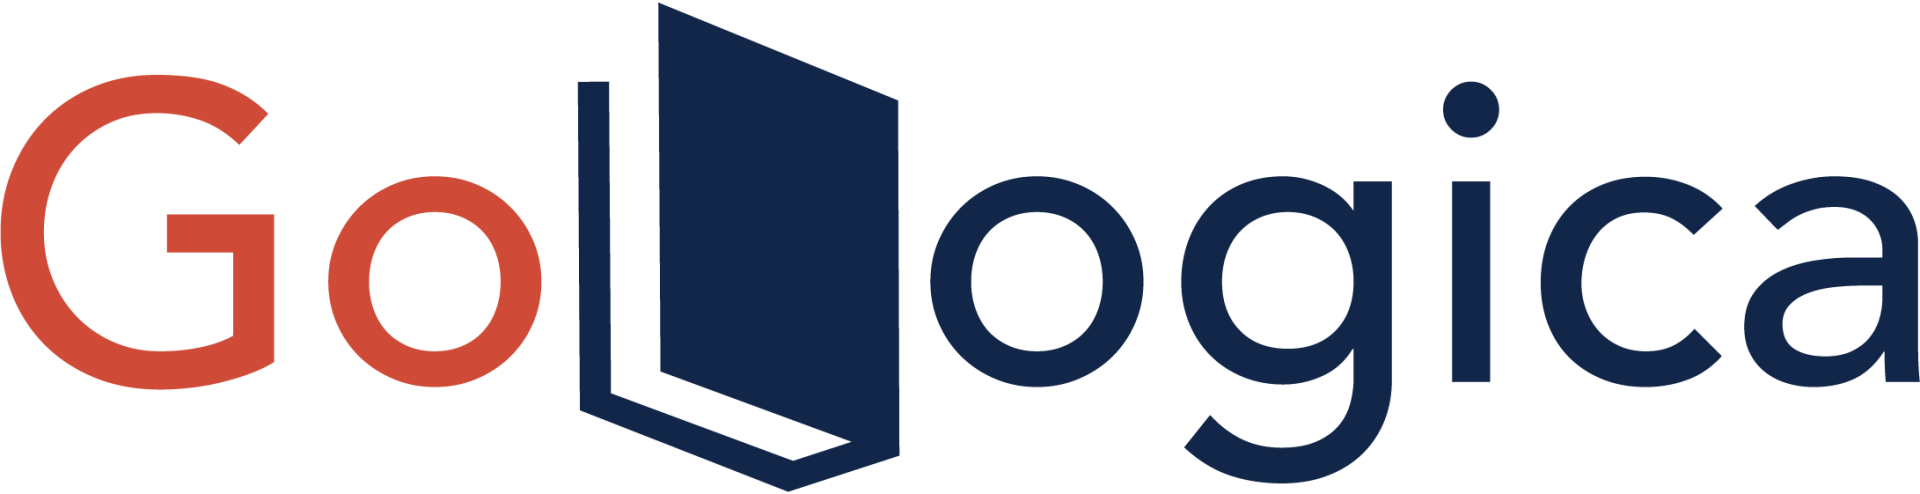 Gologica_logo 1